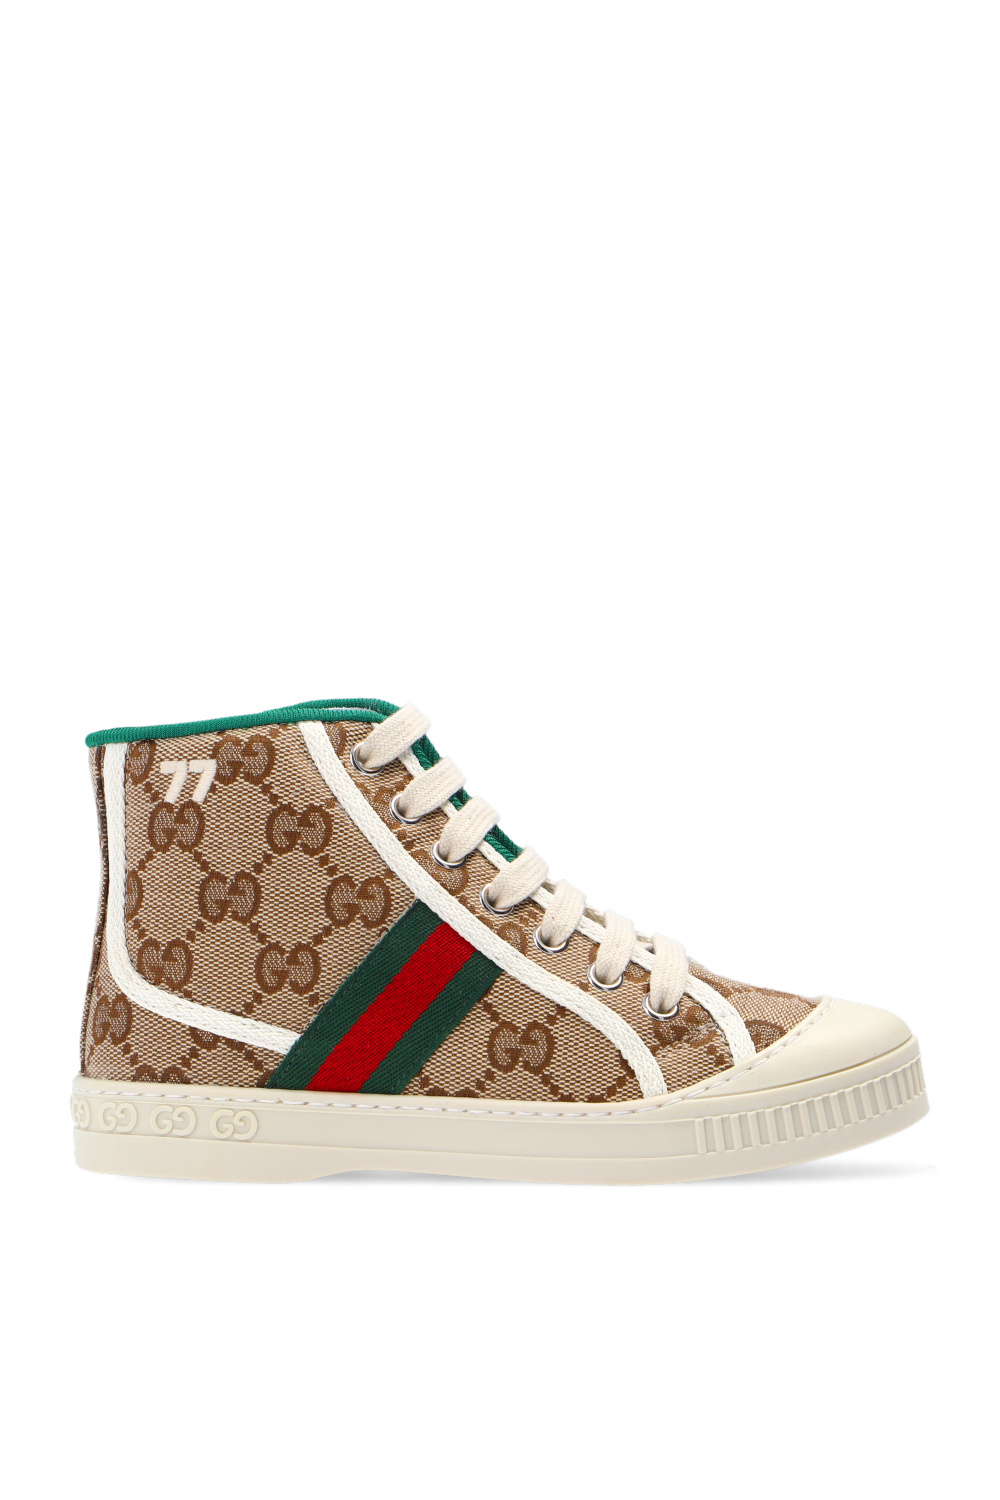 Gucci Kids Fashion Sneakers